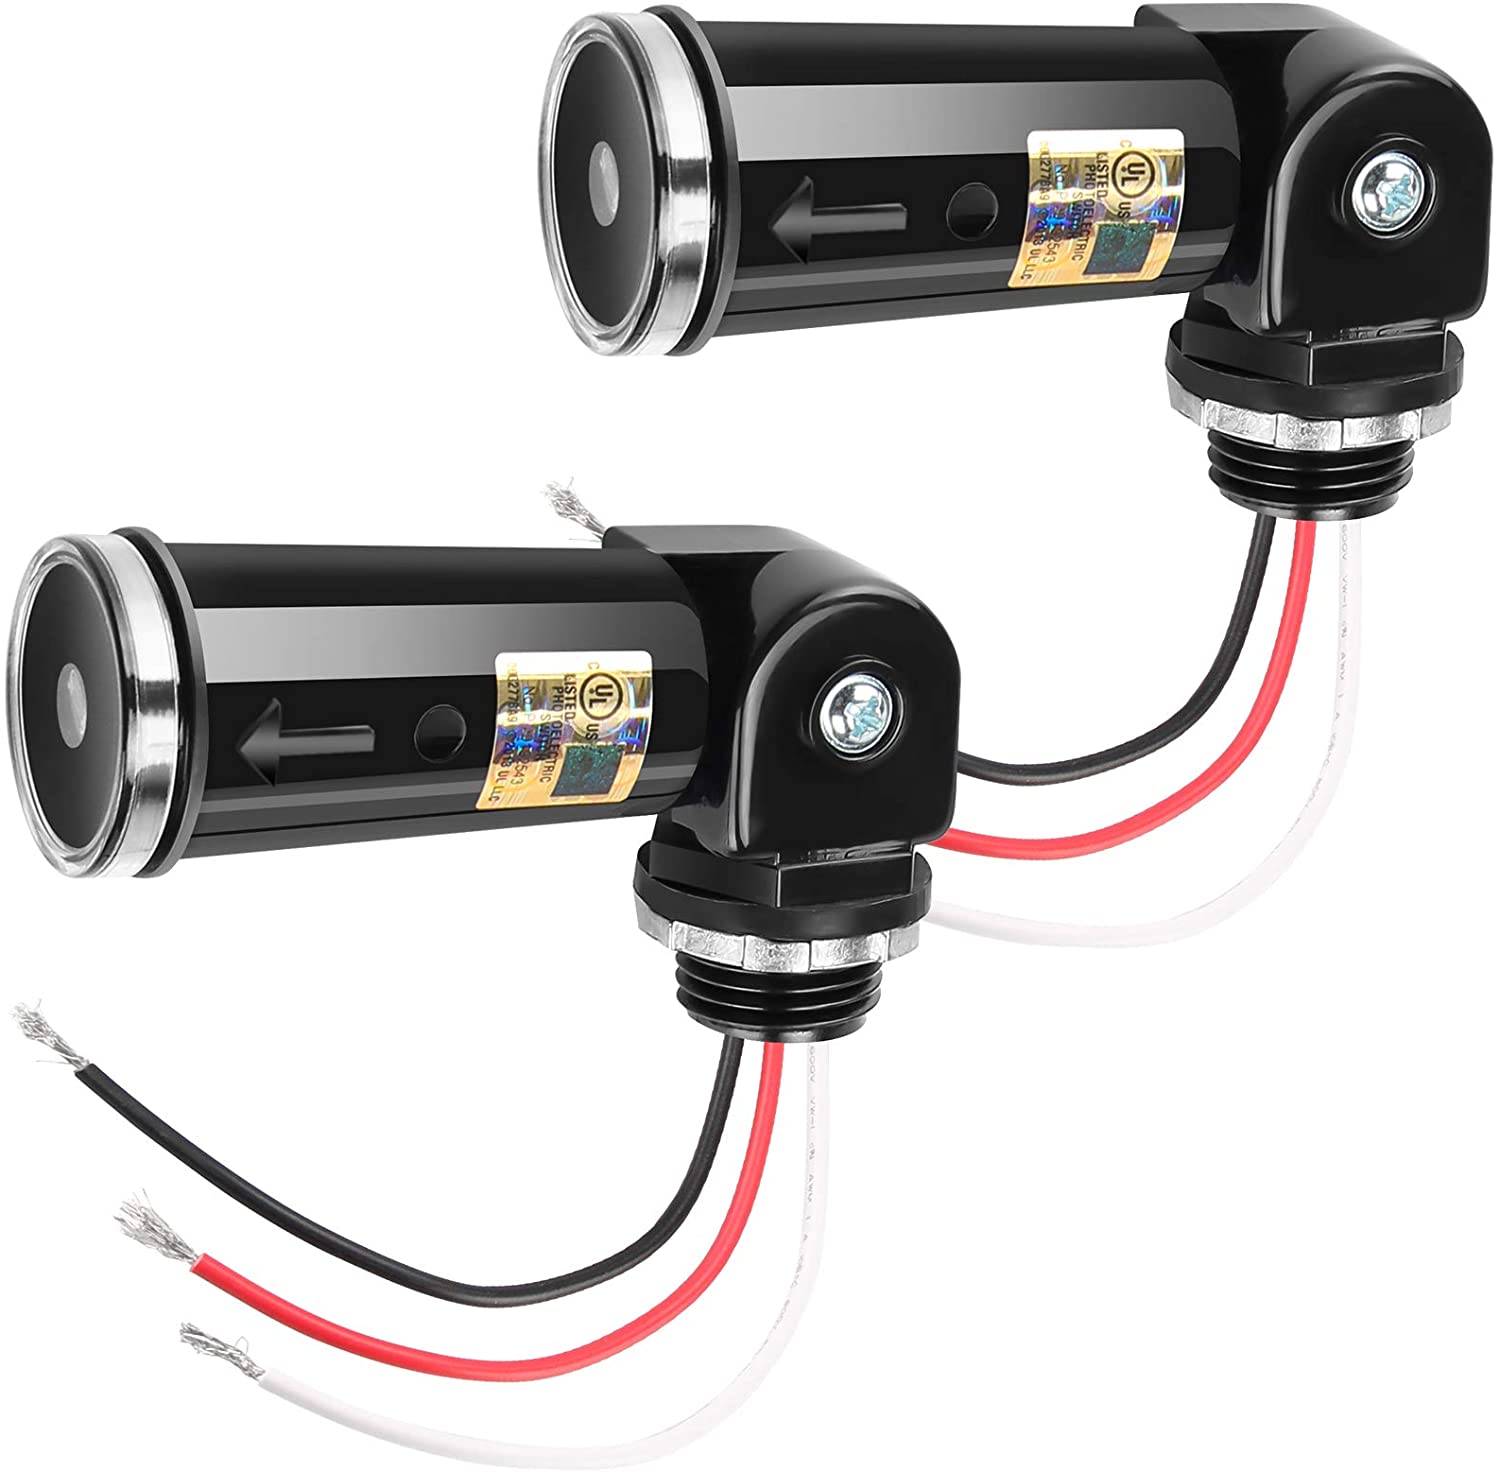 Street Light Photocell Adapter : Photocell Sensor Light Switch Outdoor ...